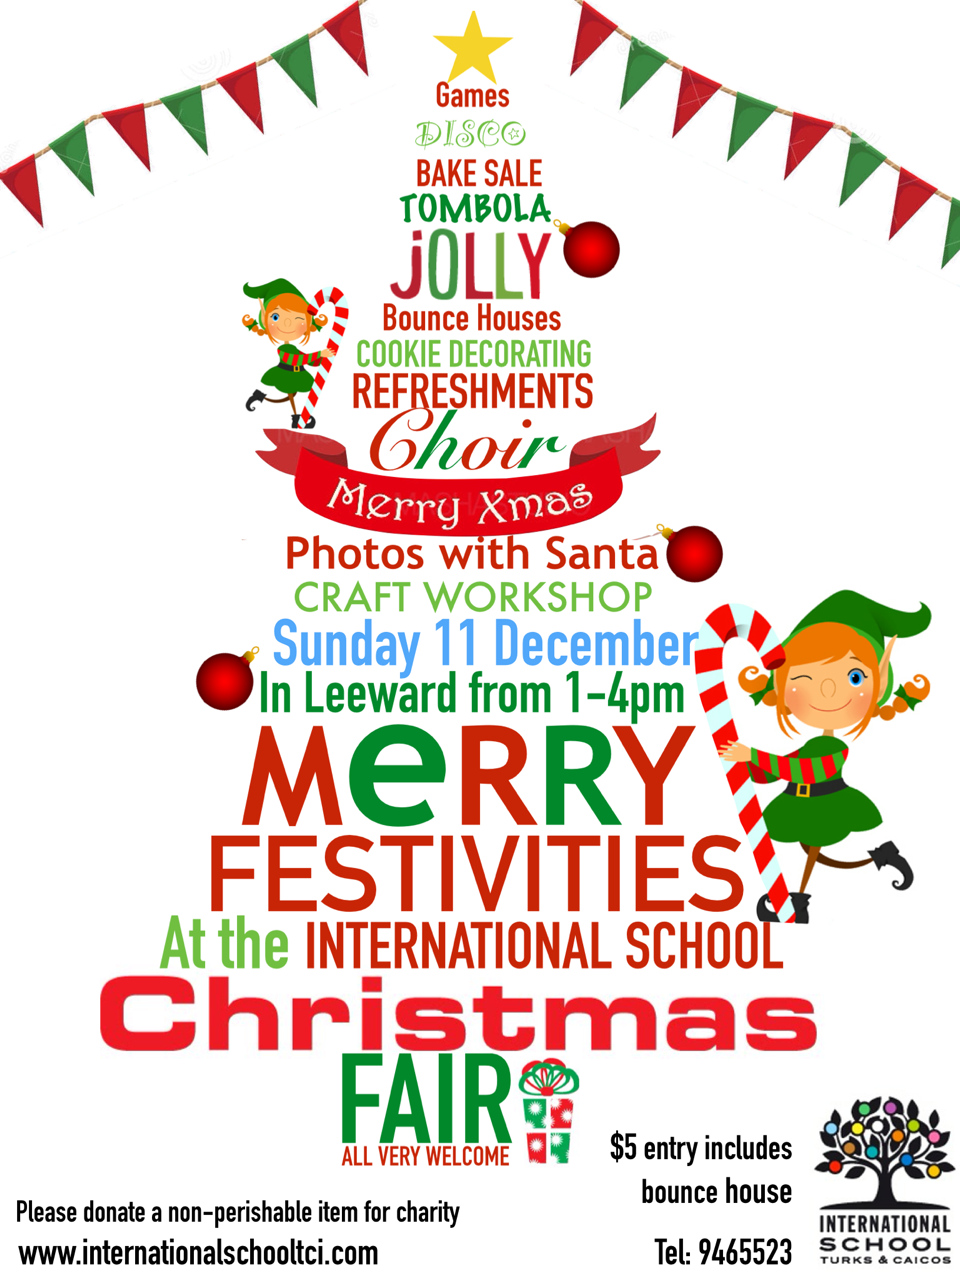 International School Christmas Fair 2016 - Christmas Fayre, Transparent background PNG HD thumbnail